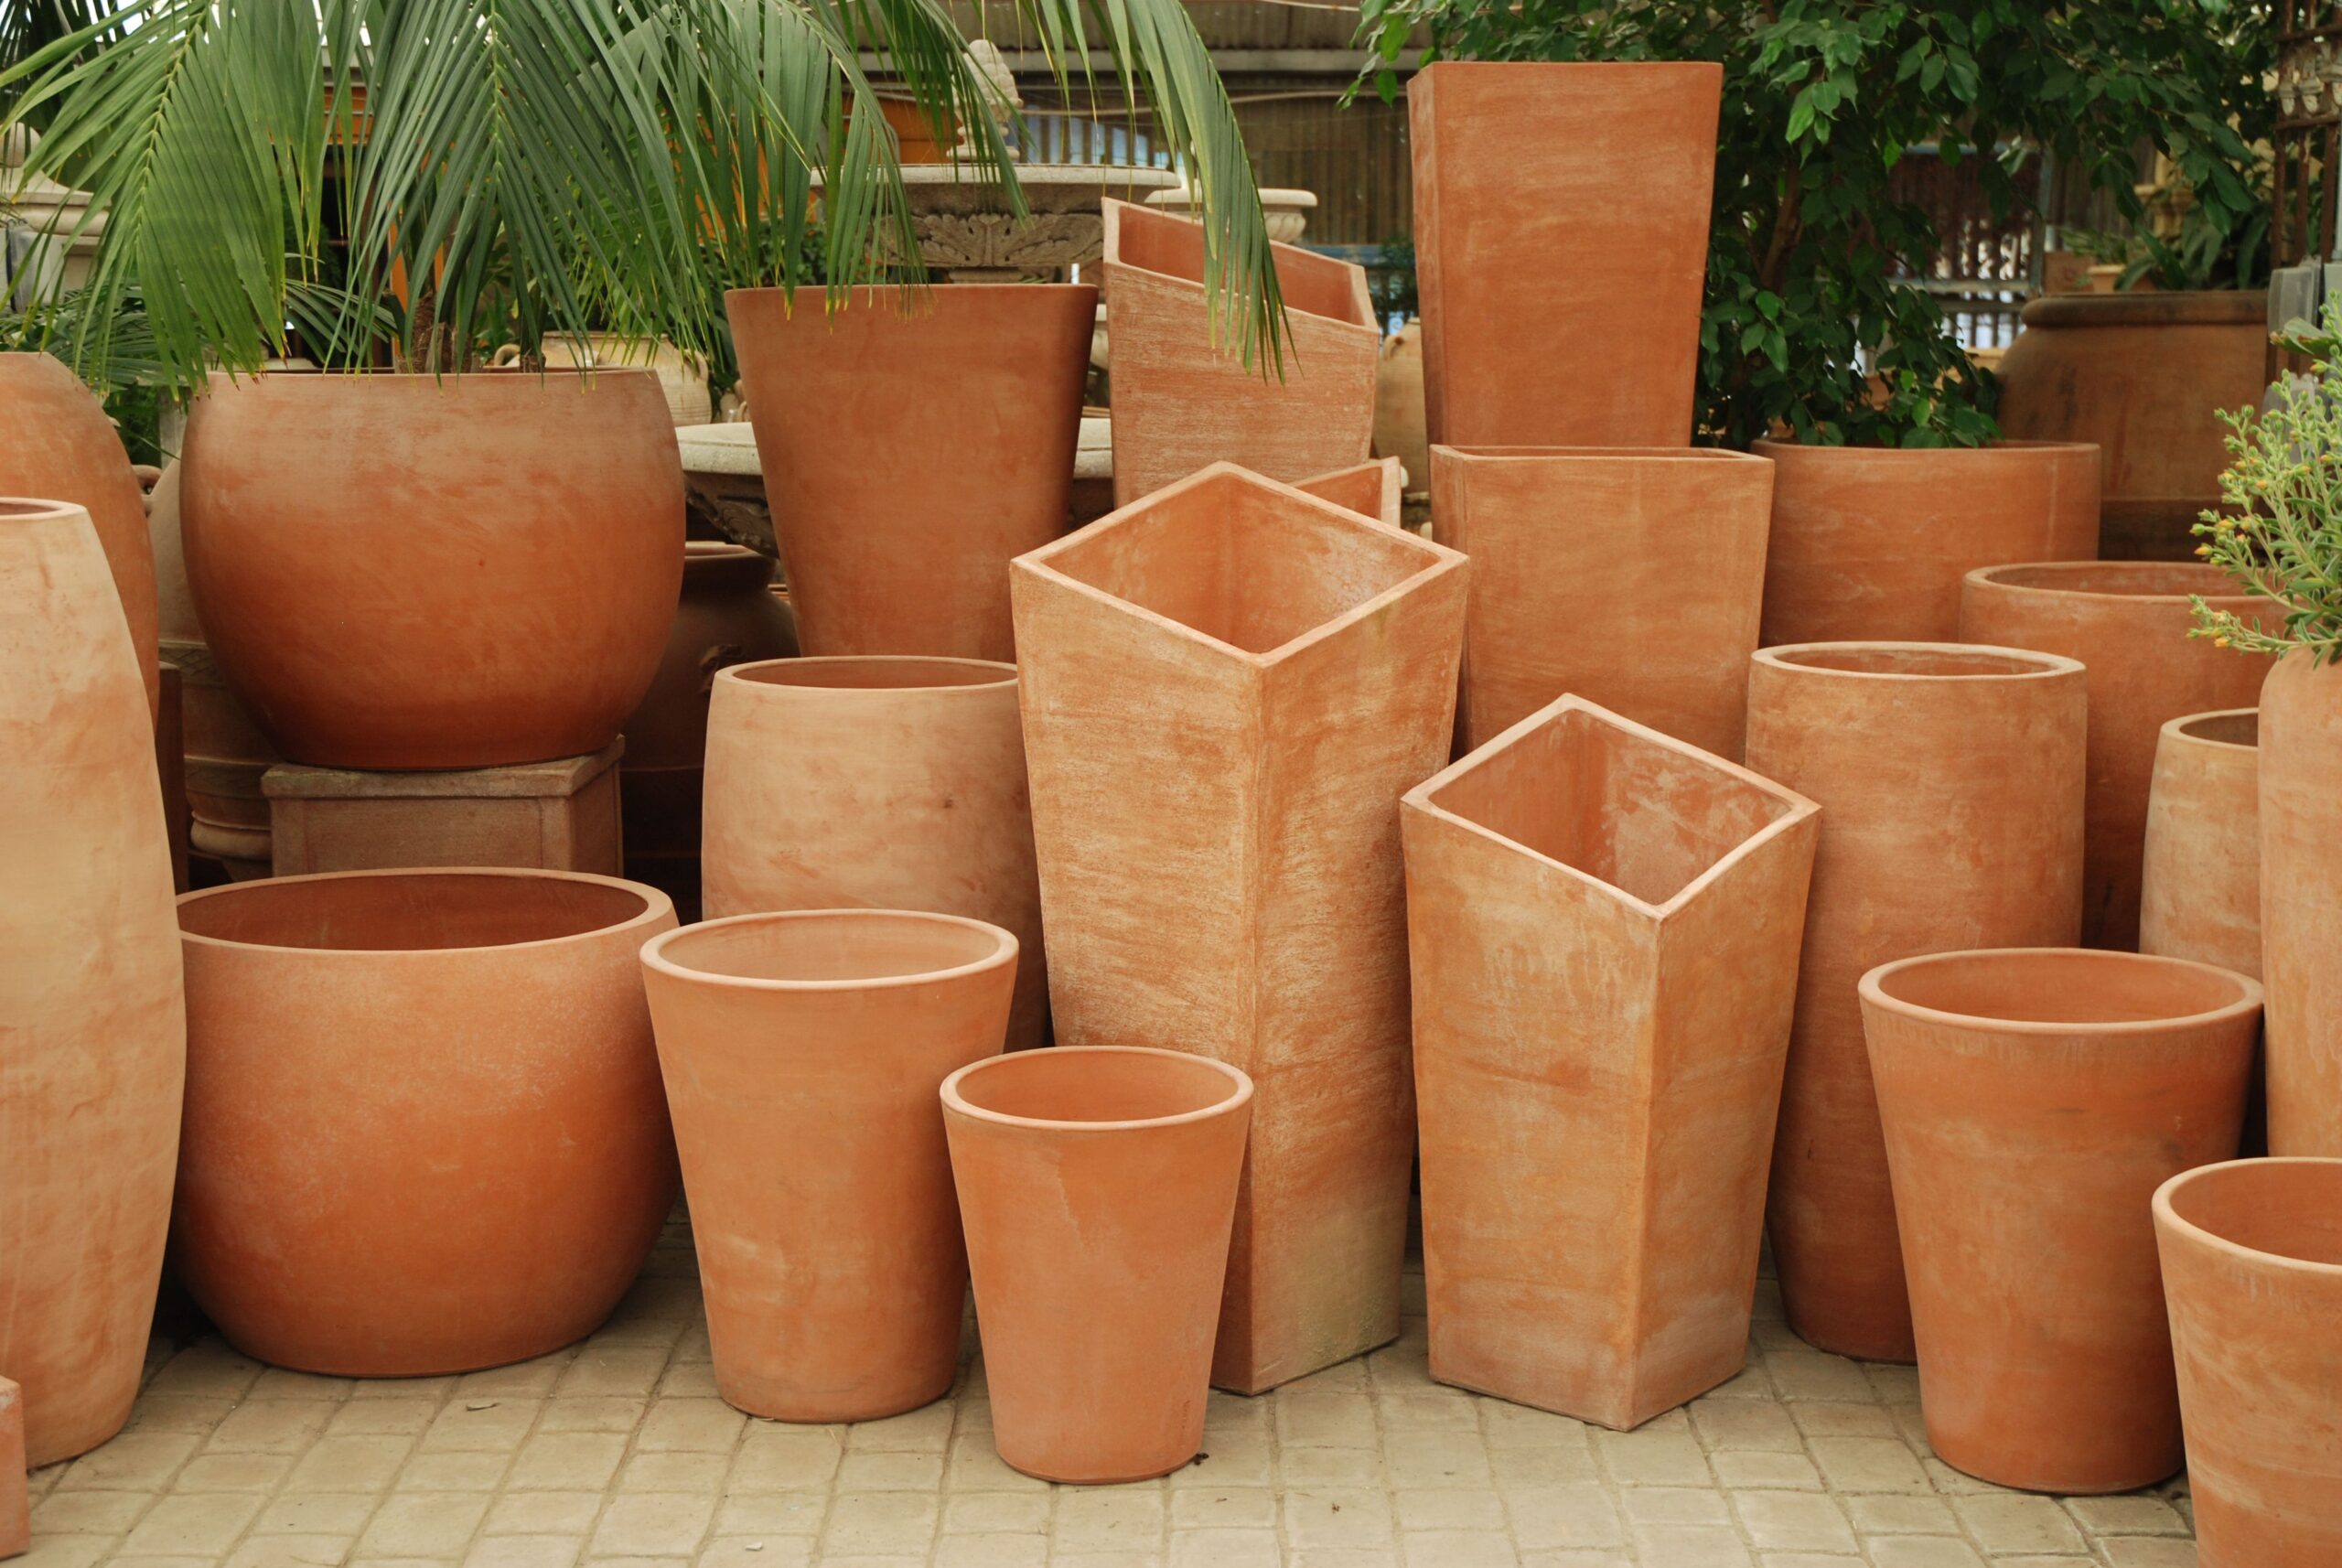 Terracott Pots Scaled 